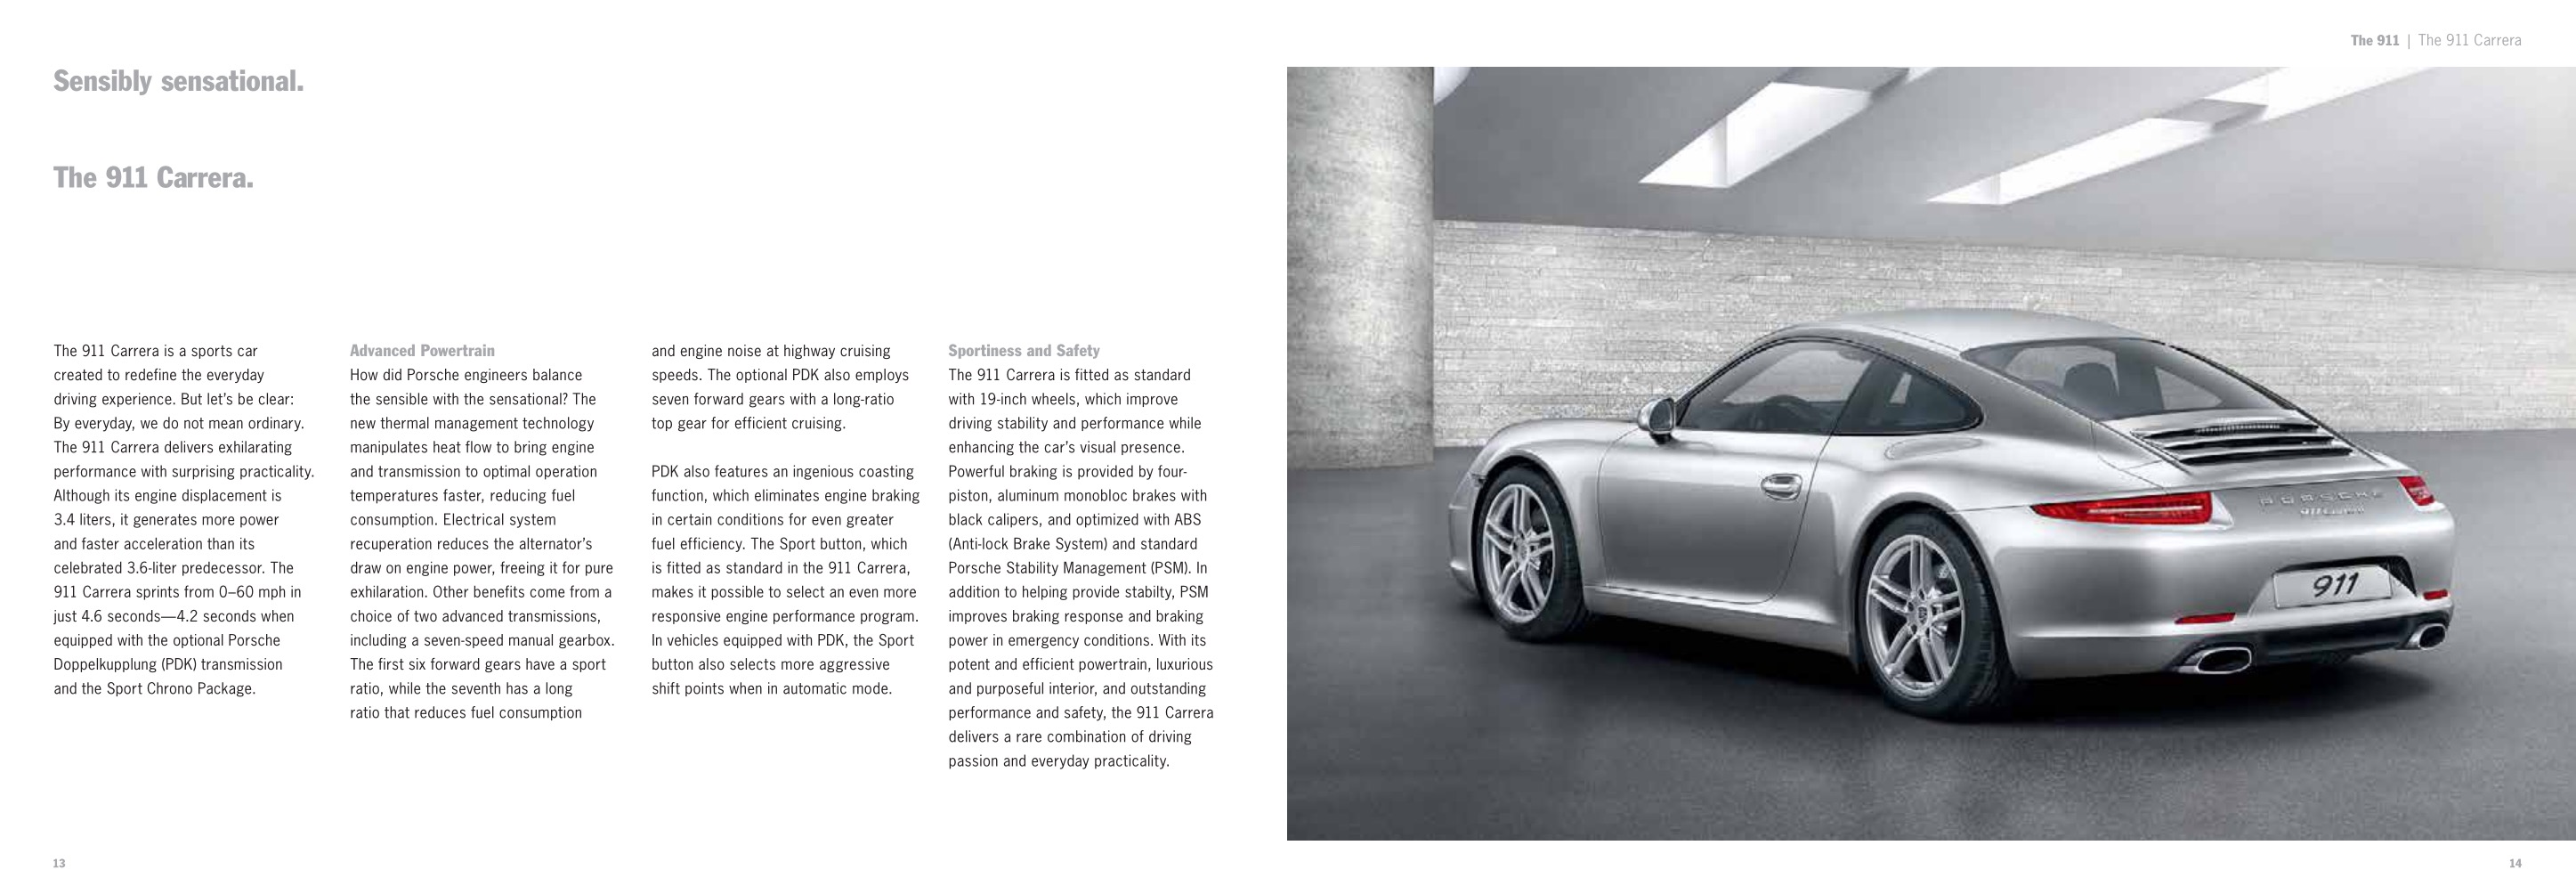 2013 Porsche 911 Brochure Page 16